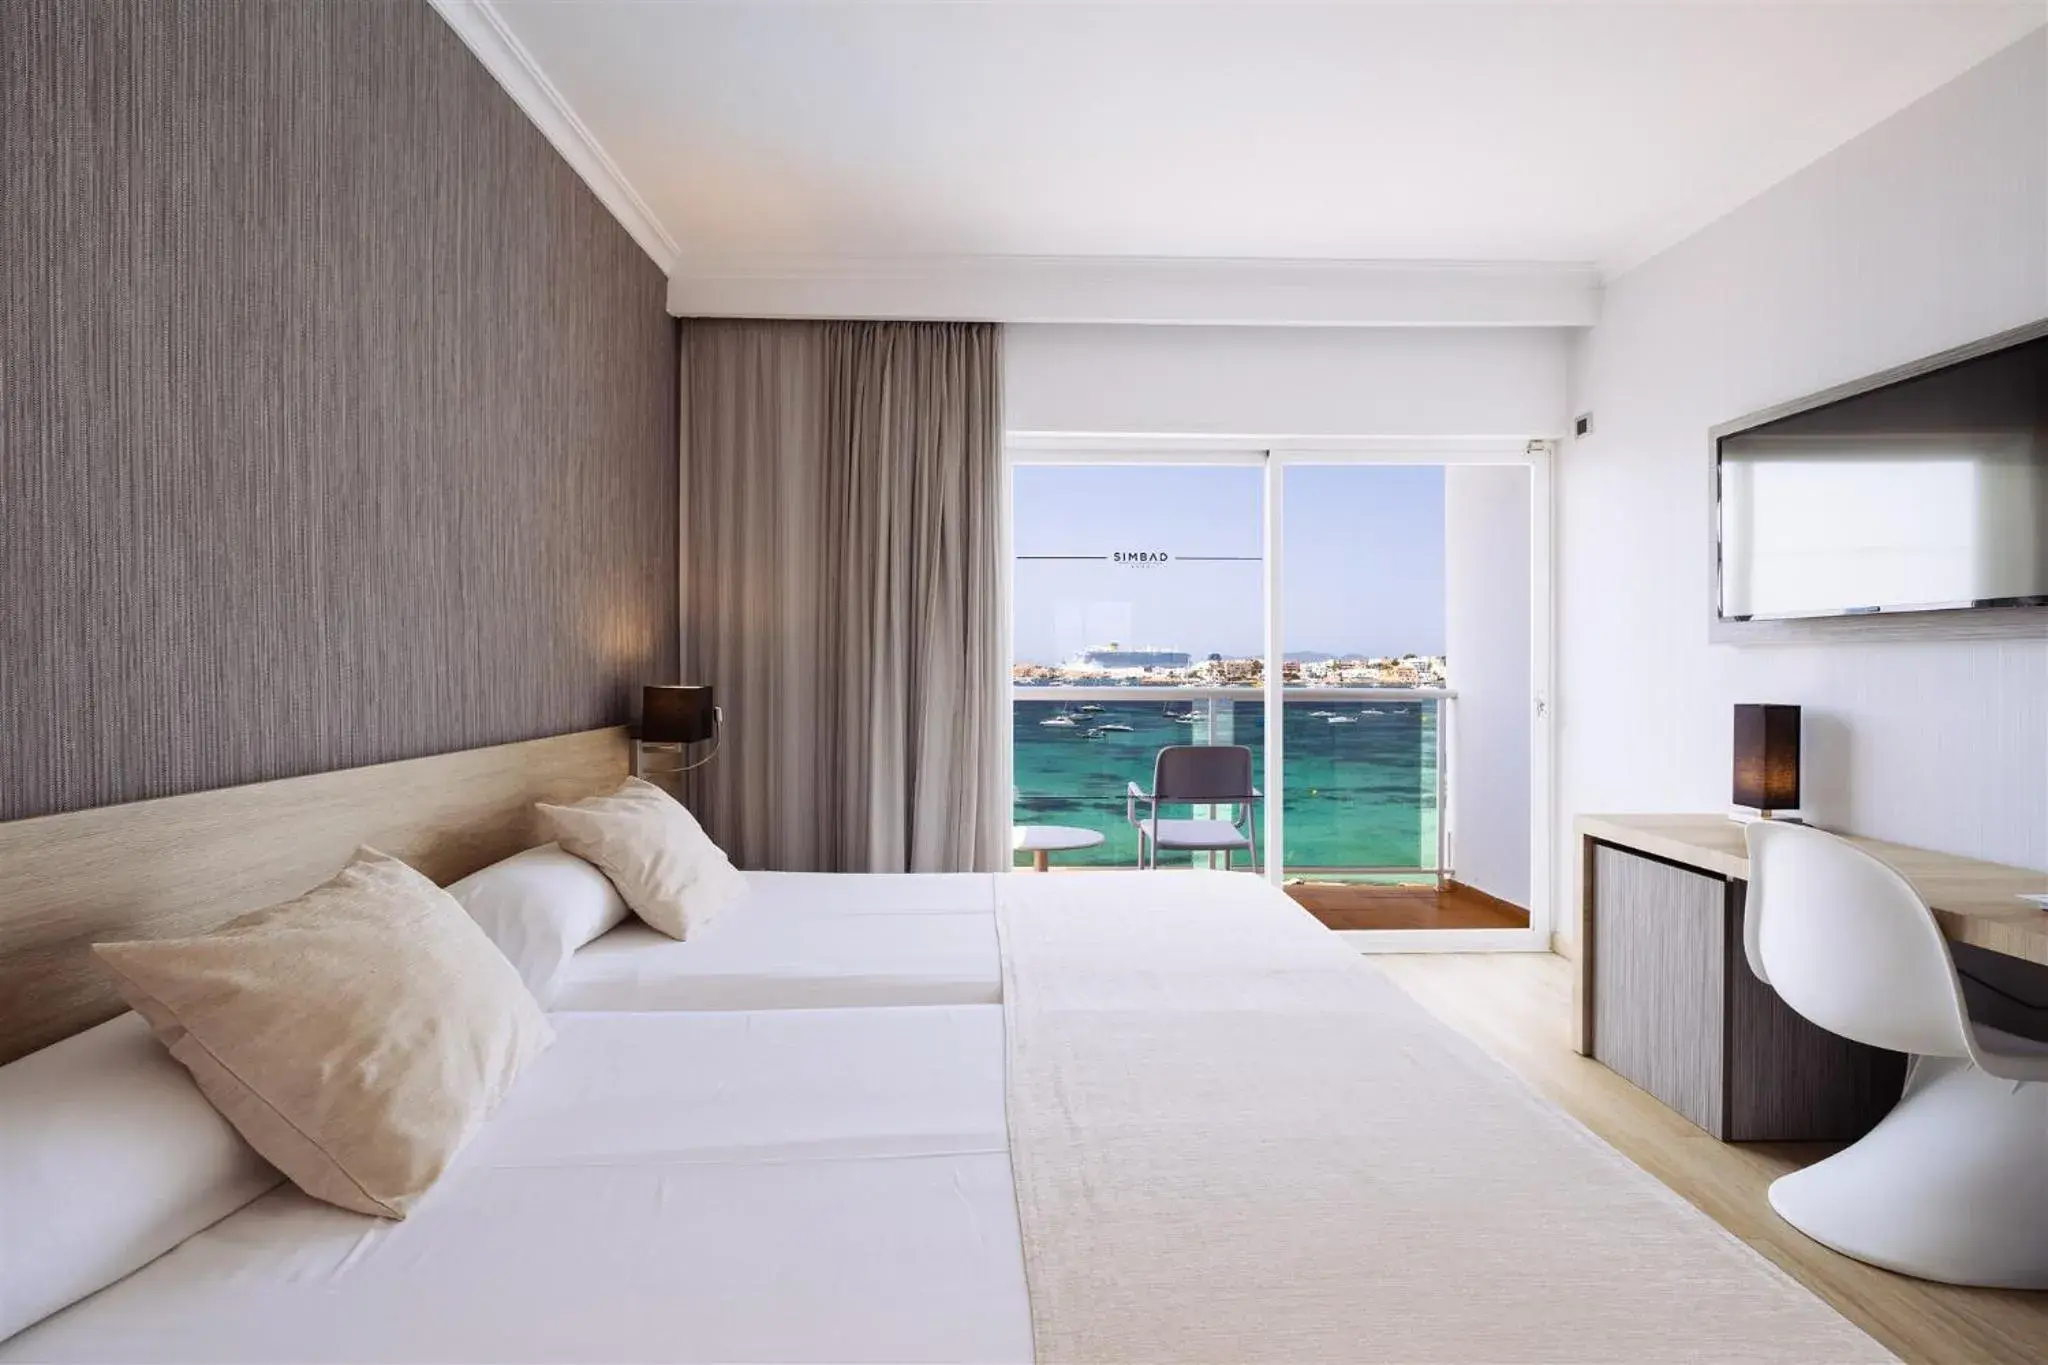 Photo of the whole room in Hotel Simbad Ibiza & Spa